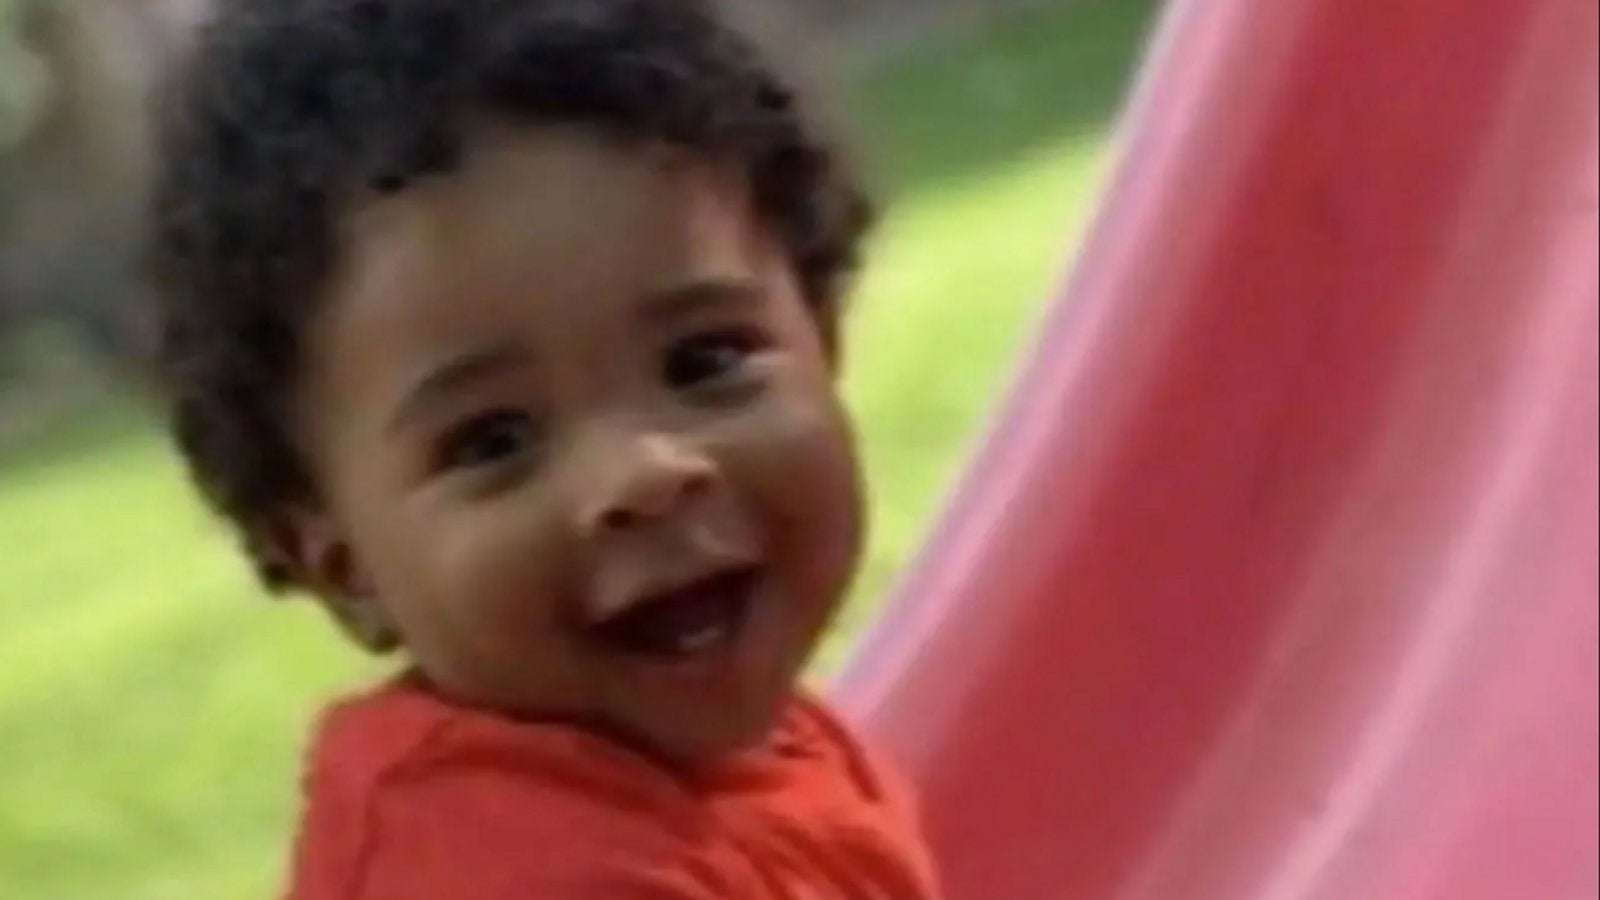 image for Philadelphia toddler dies after being shot at drugs deal